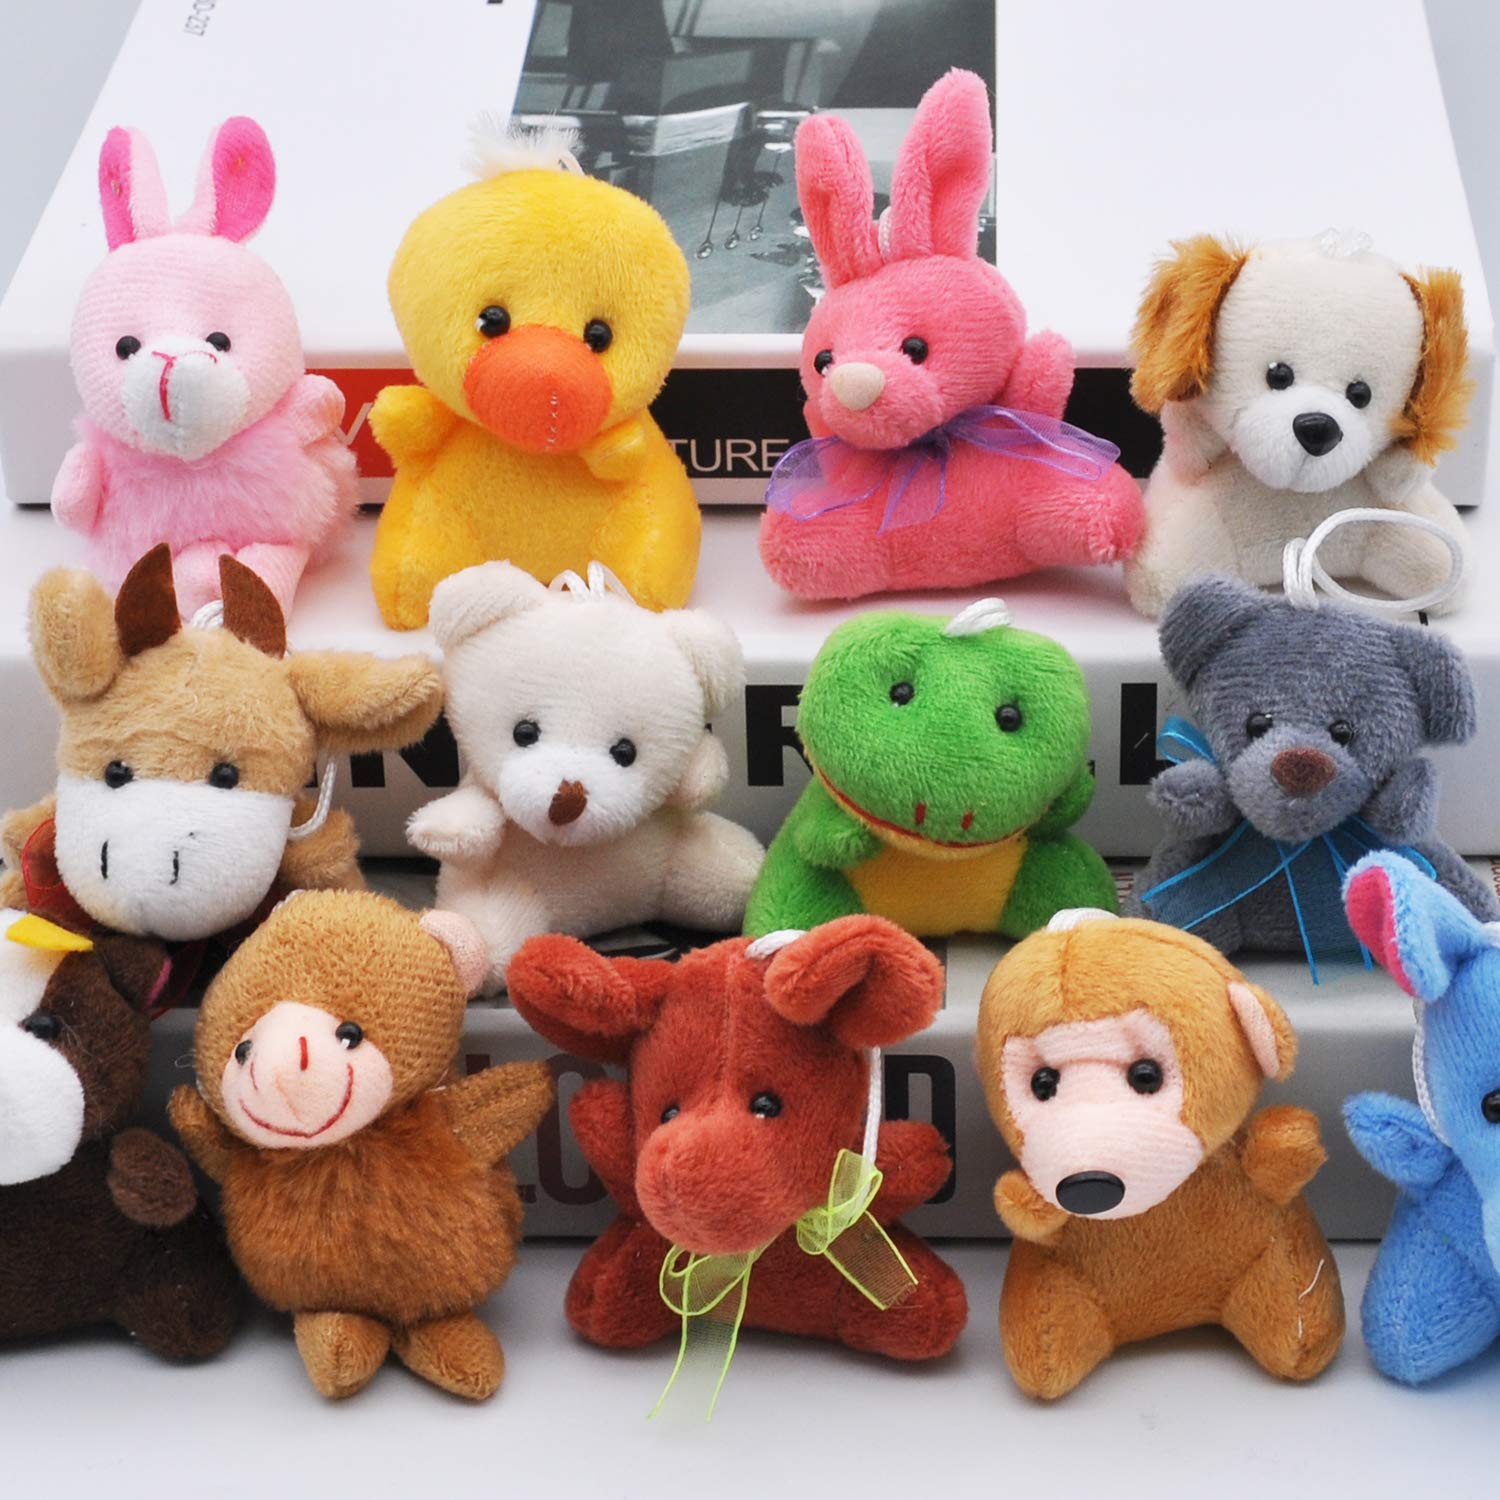 Joyin Toy 24 Pack Mini Animal Plush Toy Assortment (24 units 3" each) Kids Valentine Gift Easter Egg Filter Party Favors